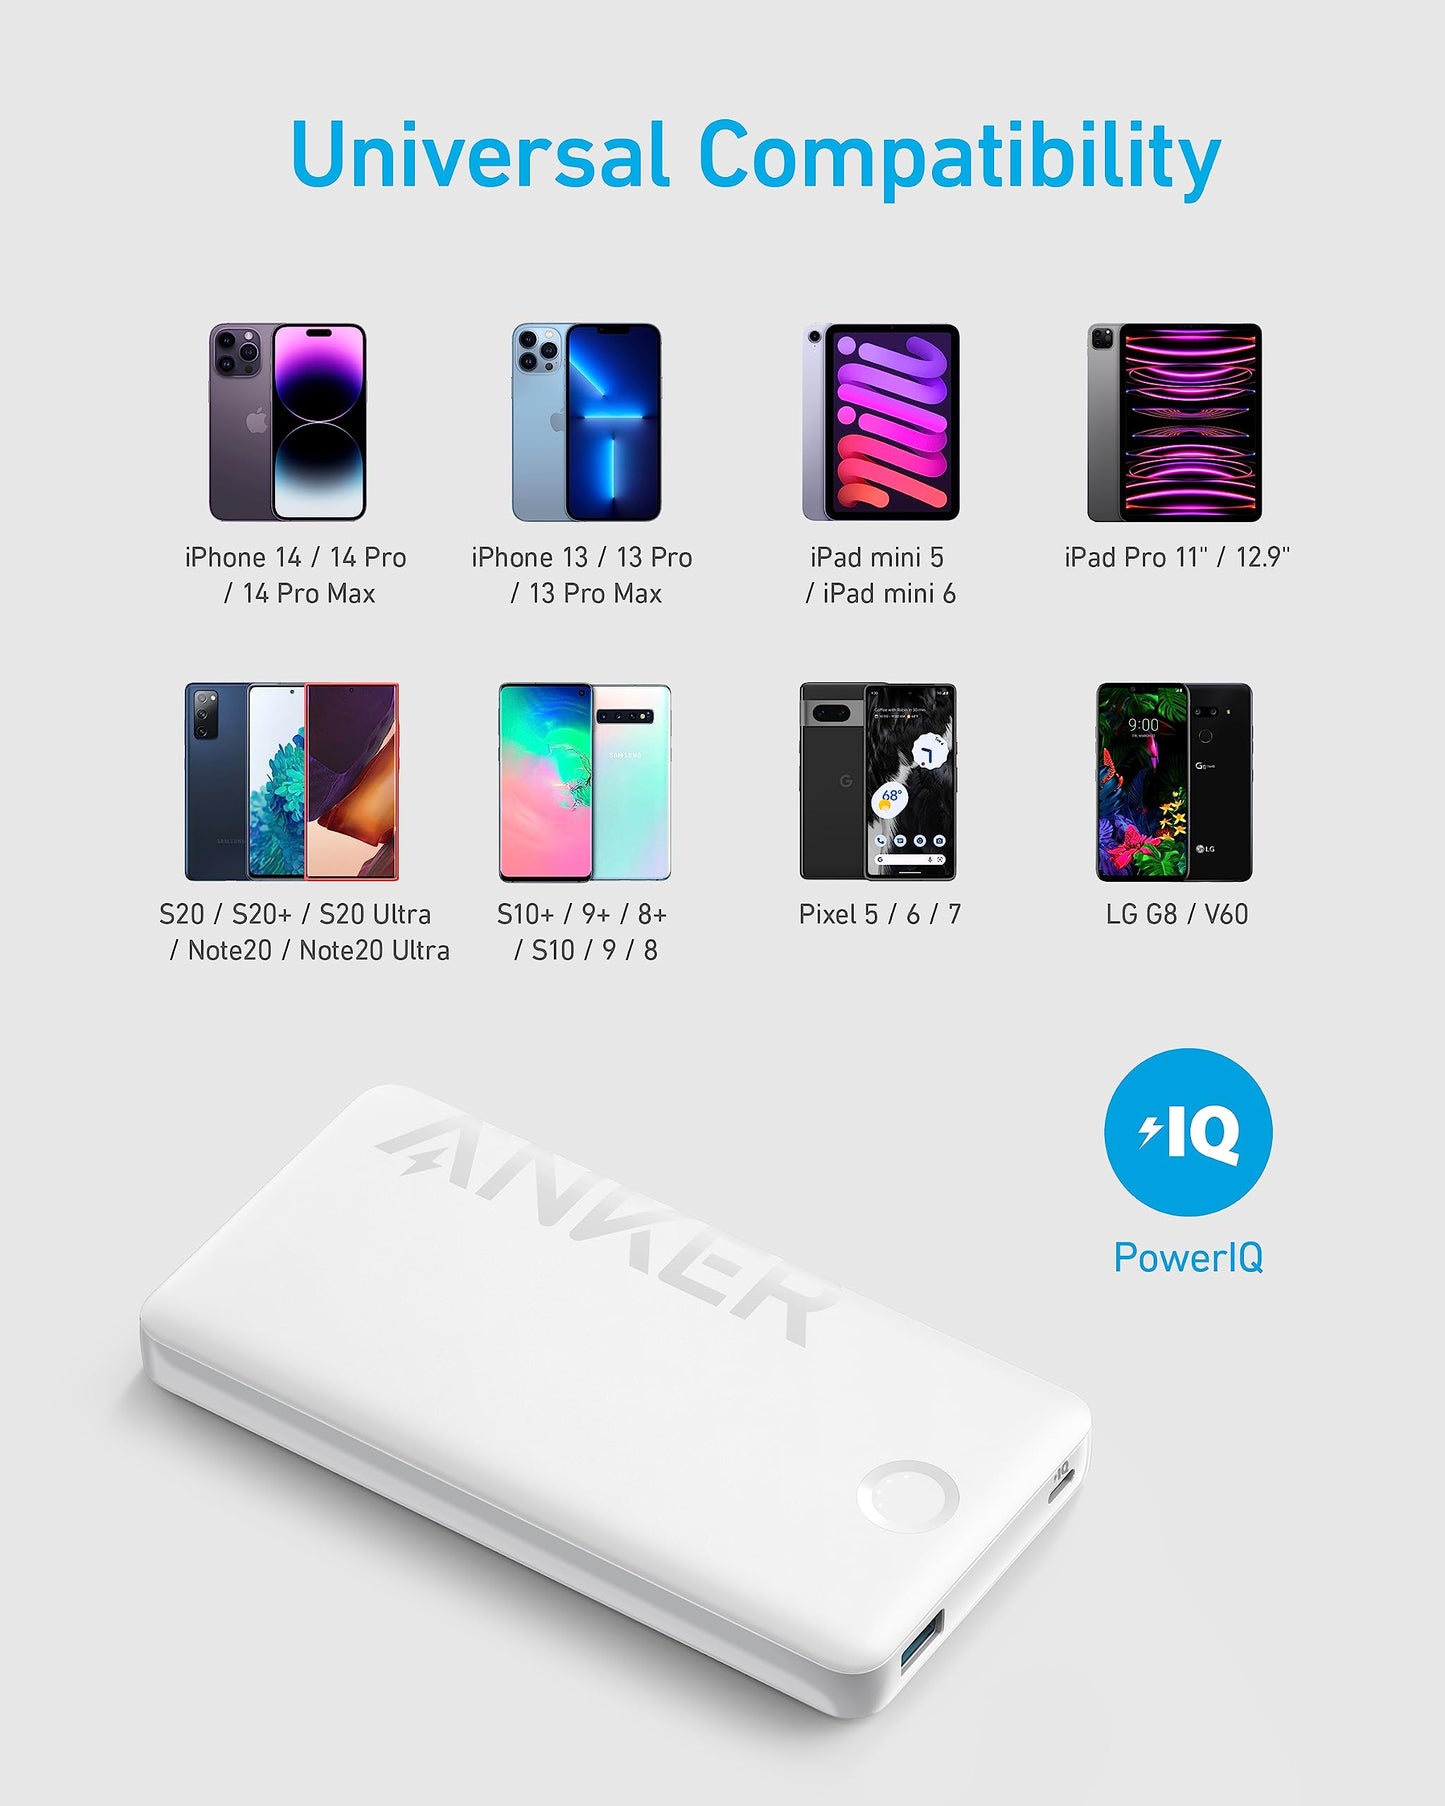 Anker 323 USB-C Power Bank (PowerCore PIQ)